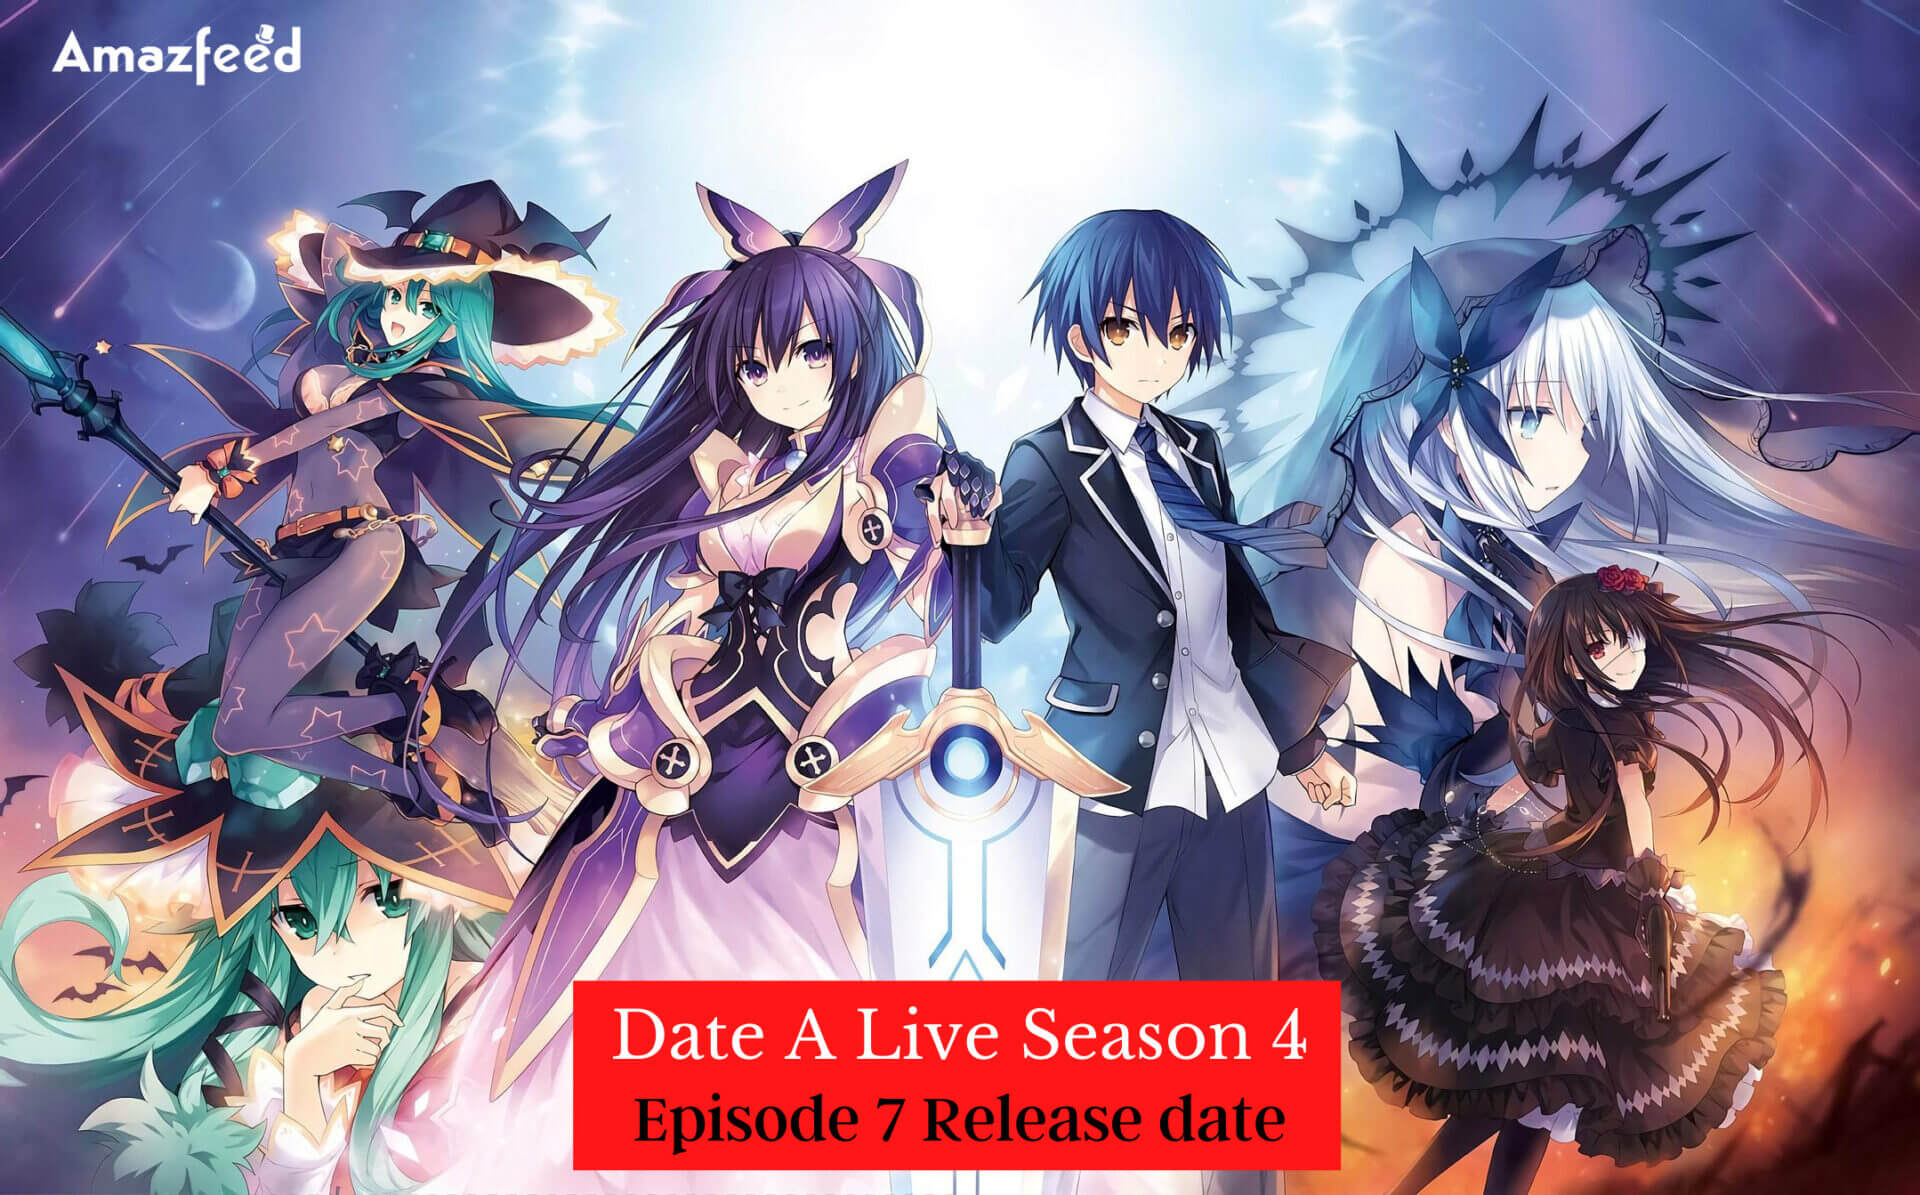 Date A Live Season 4 episode 7 release date